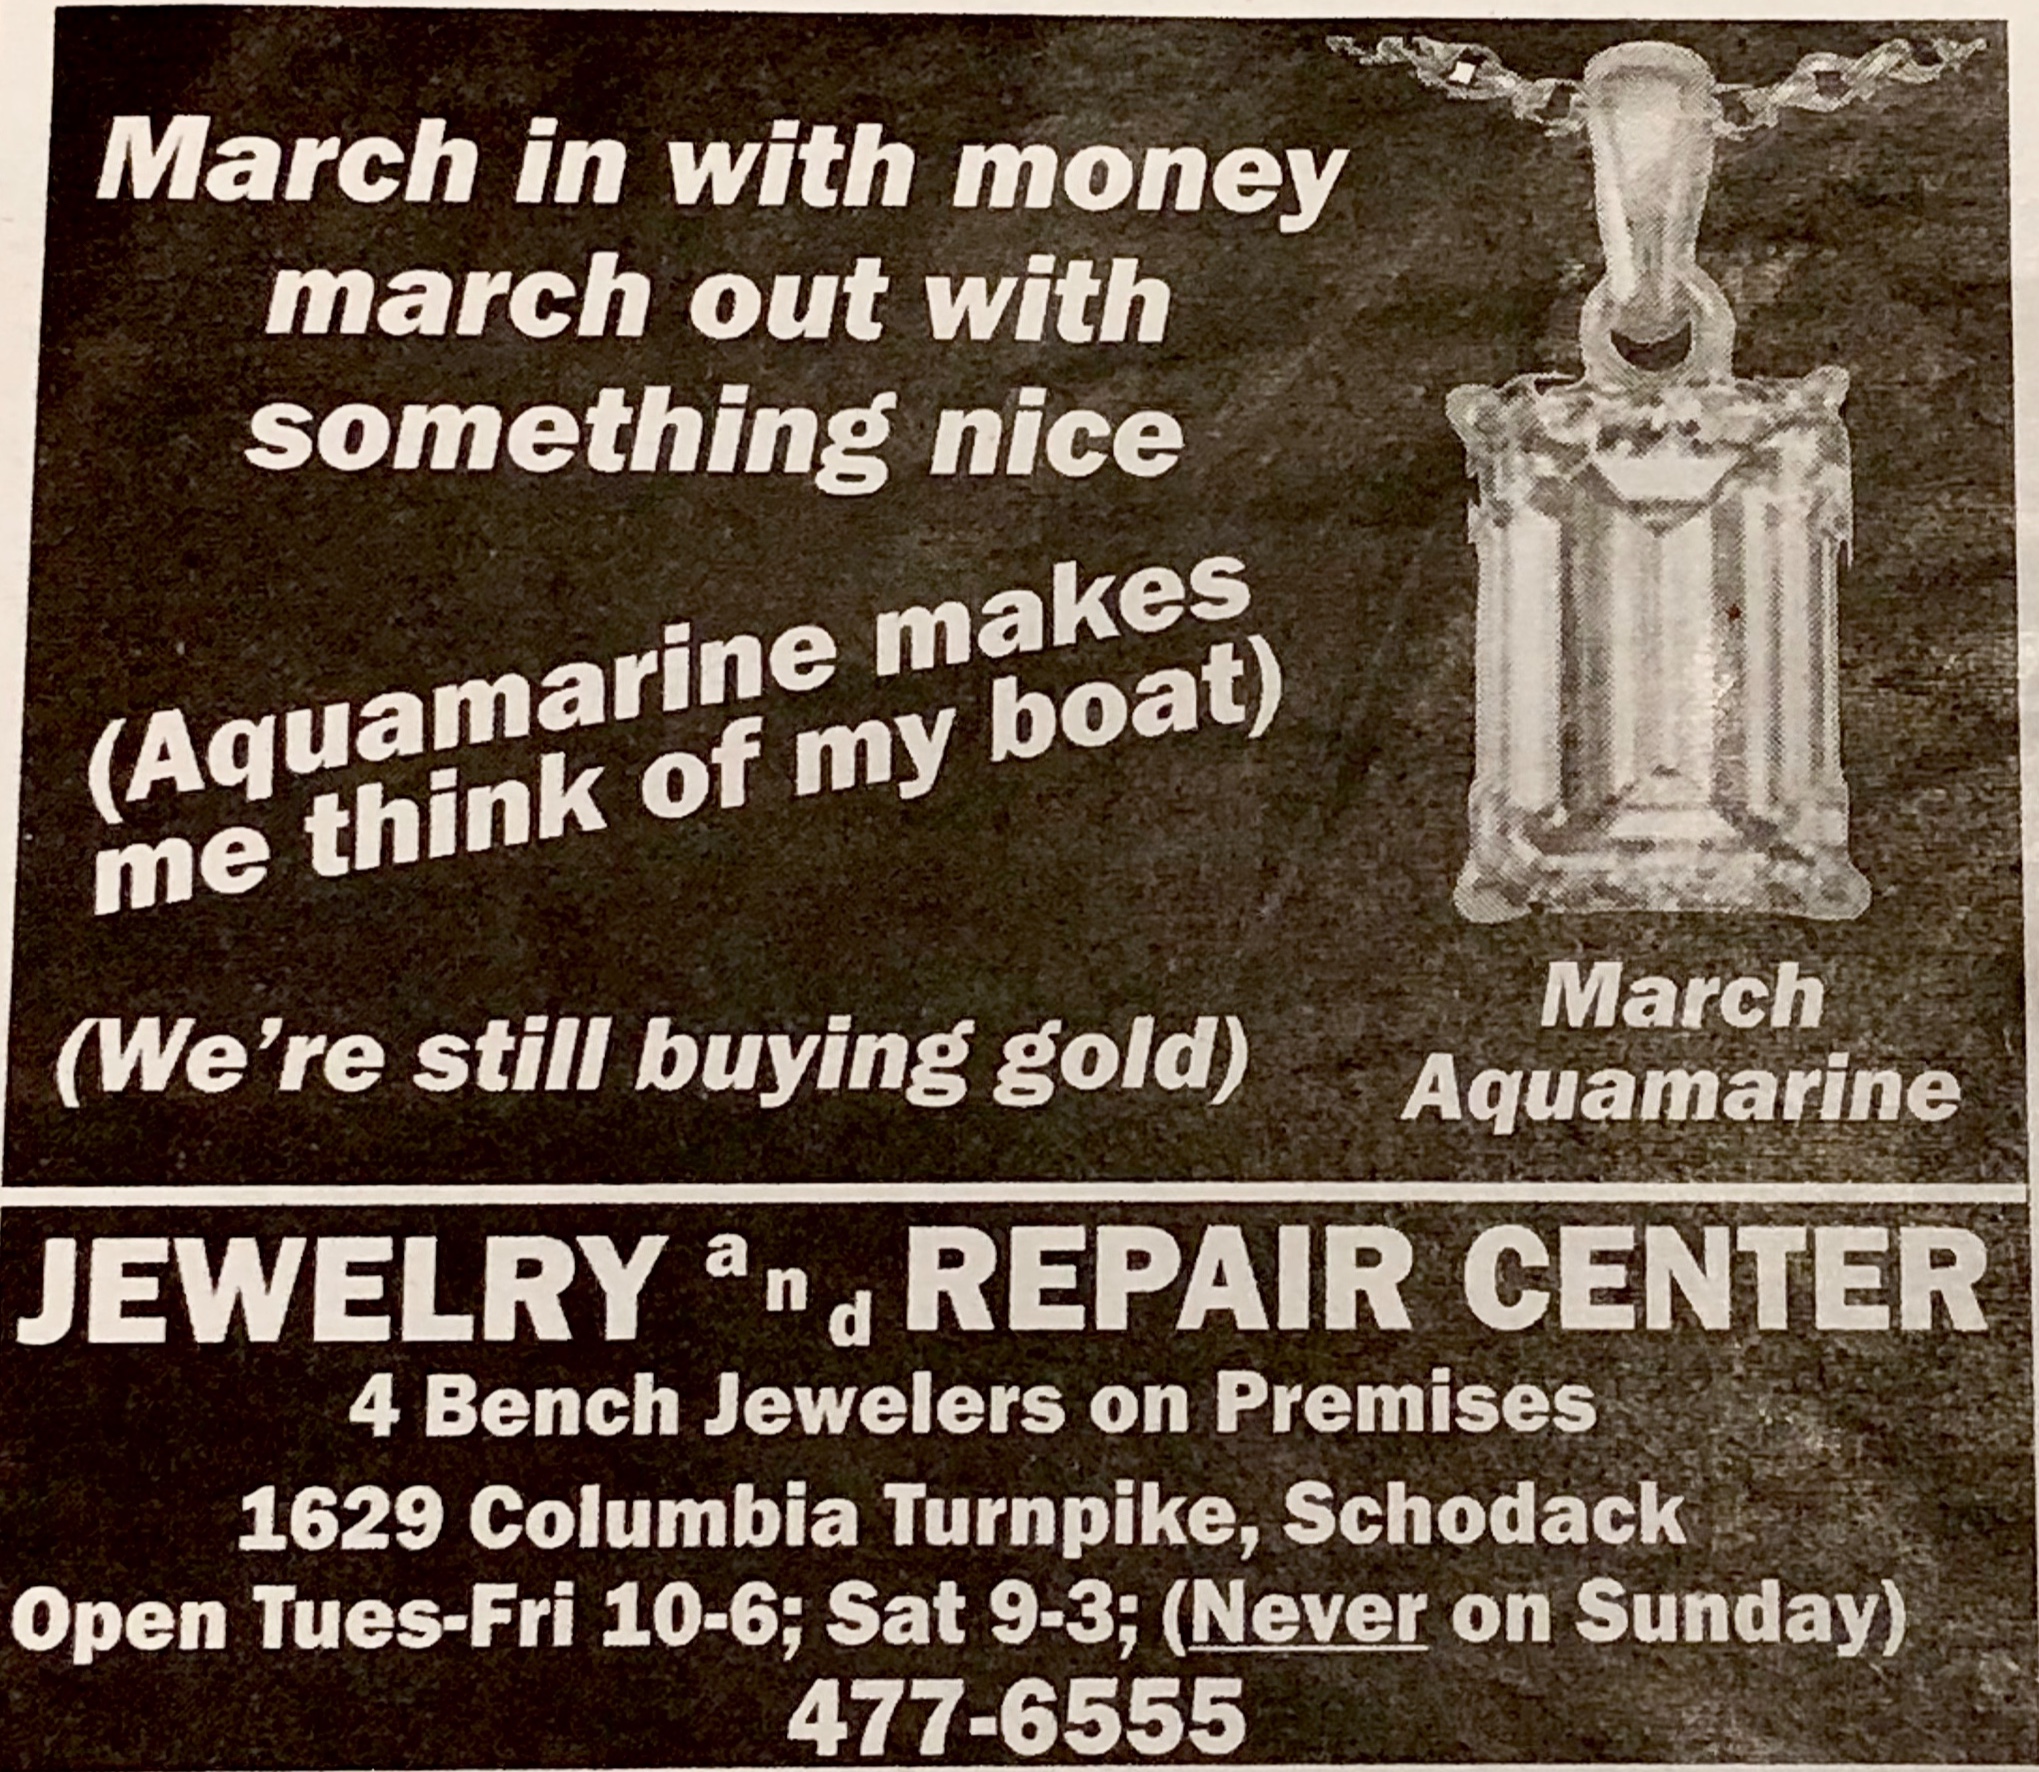 Print Ads Jewelry Repair Center Schodack